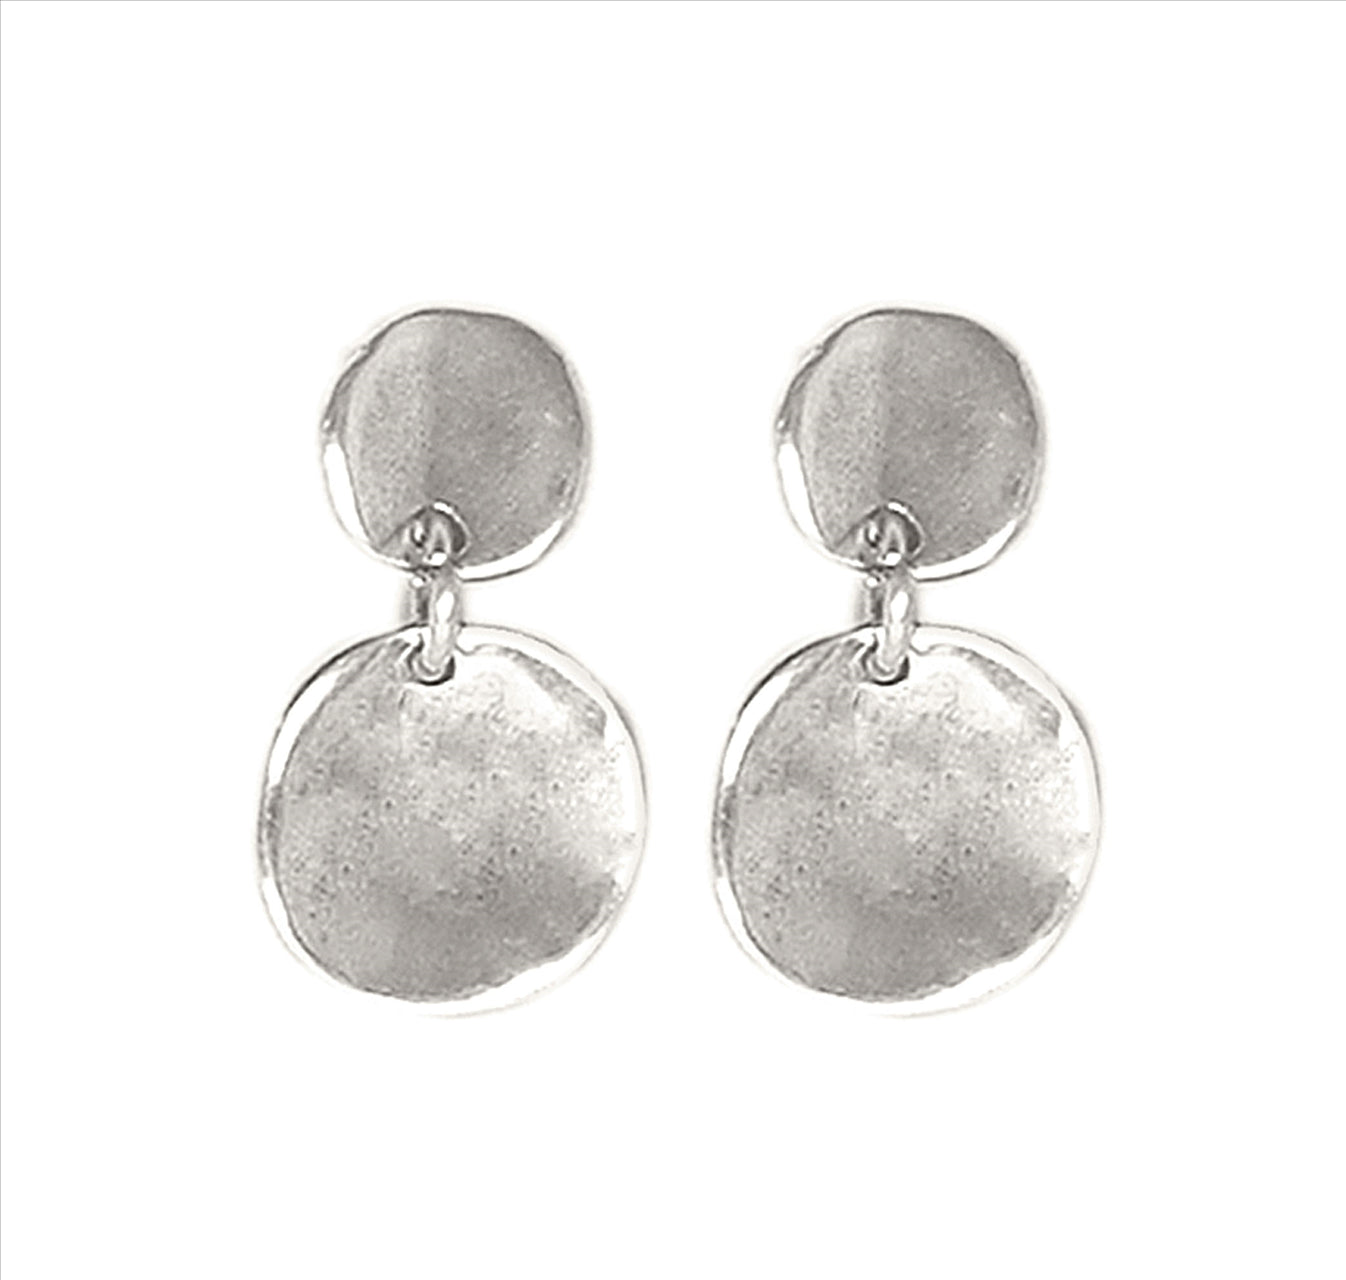 SCALES EARRINGS, earrings in metal mix plated in 15 micron silver.